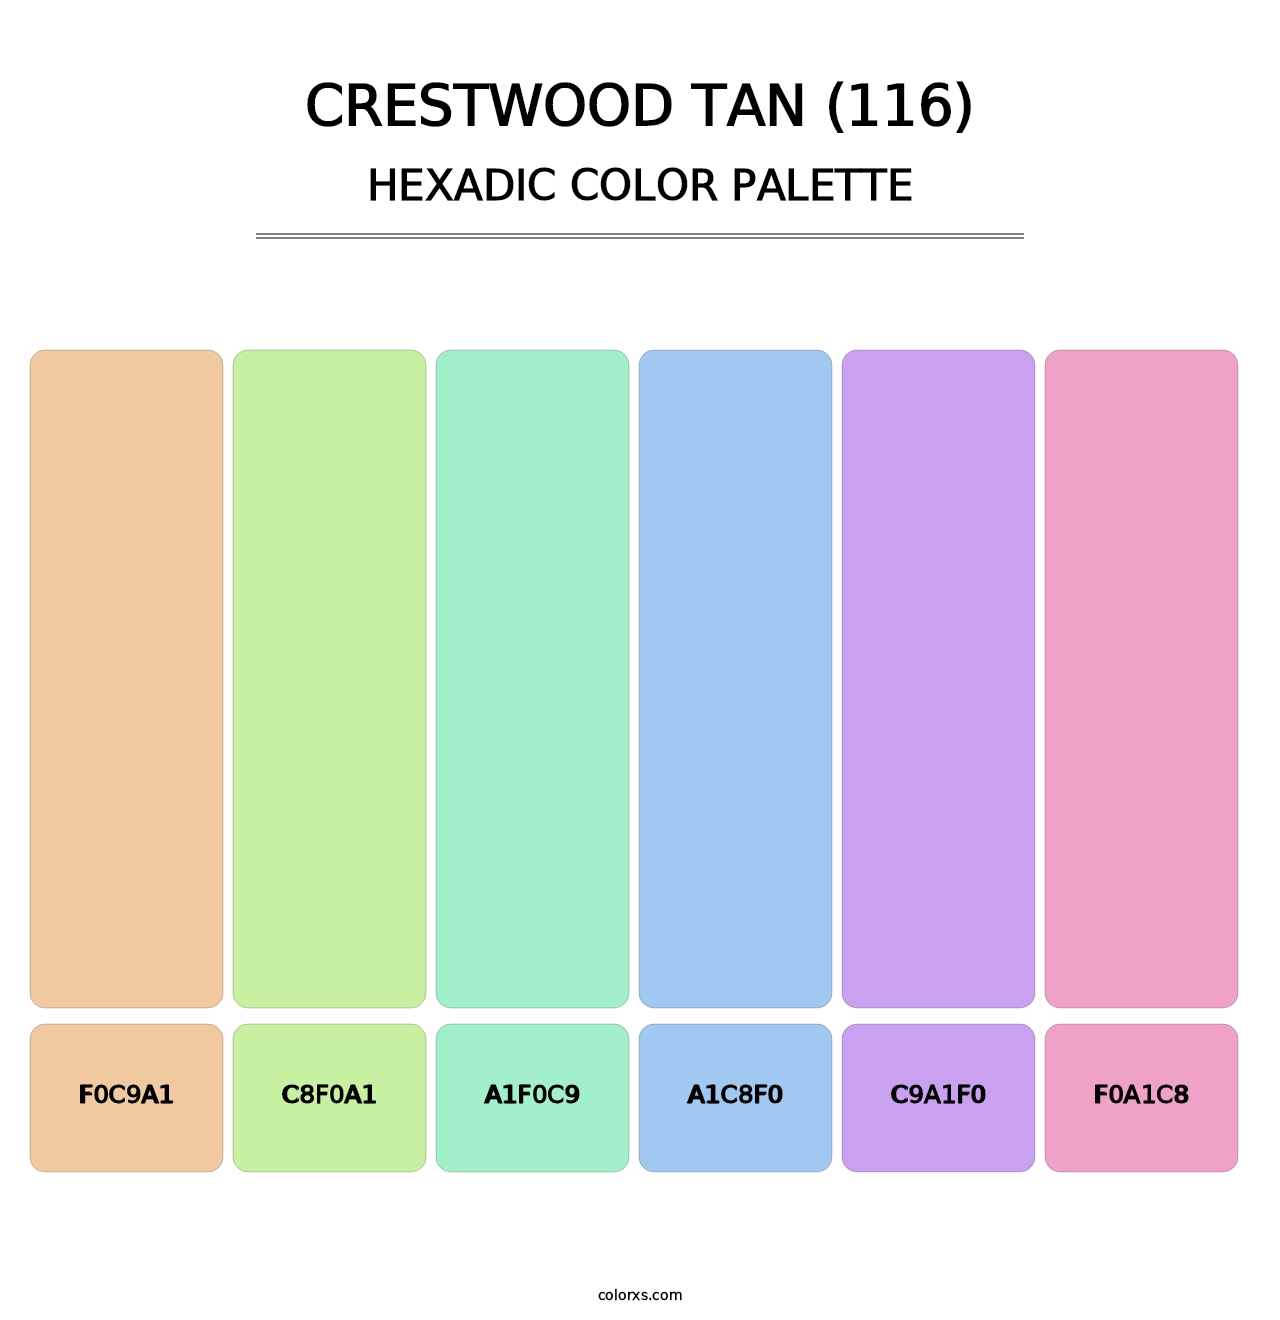 Crestwood Tan (116) - Hexadic Color Palette